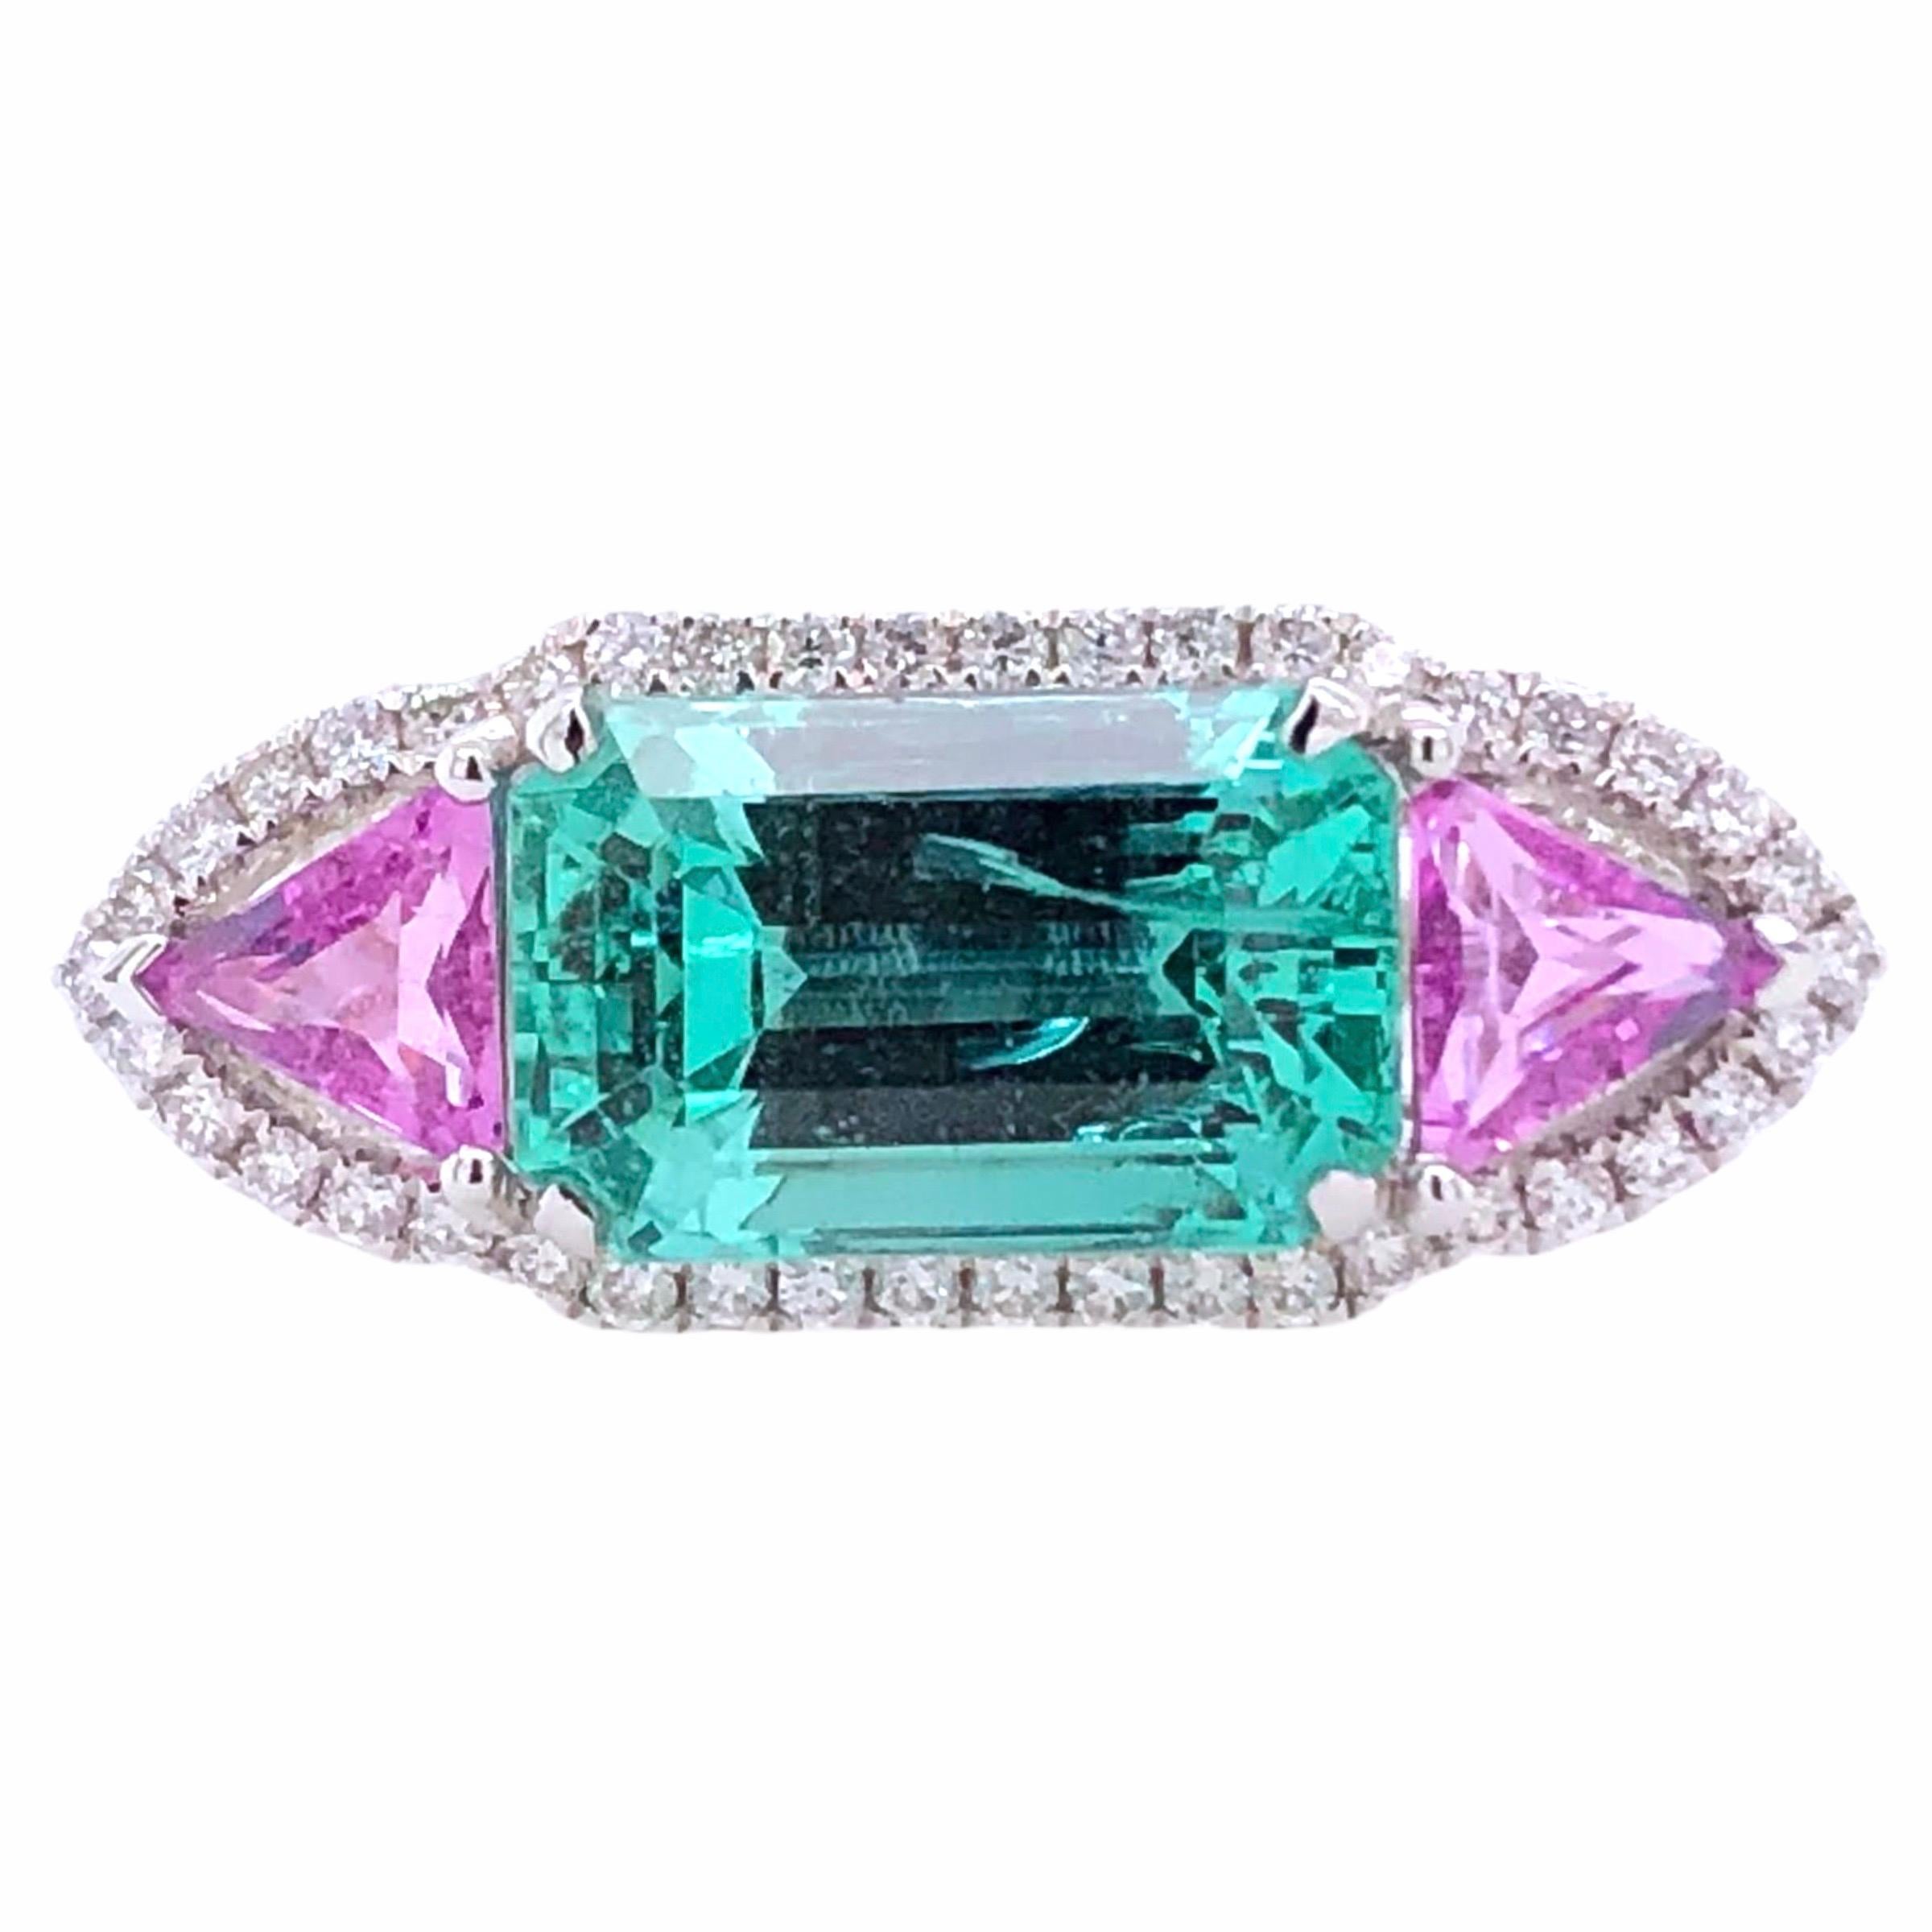 PARIS Craft House 3.24ct GRS Certified Emerald Pink Sapphire Diamond Ring in 18 Karat White Gold.

- 1 GRS Certified Emerald/3..24ct
- 2 Pink Sapphires/1.09ct
- 102 Round Diamonds/0.52ct
- 18K White Gold

Designed and crafted at PARIS Craft House.